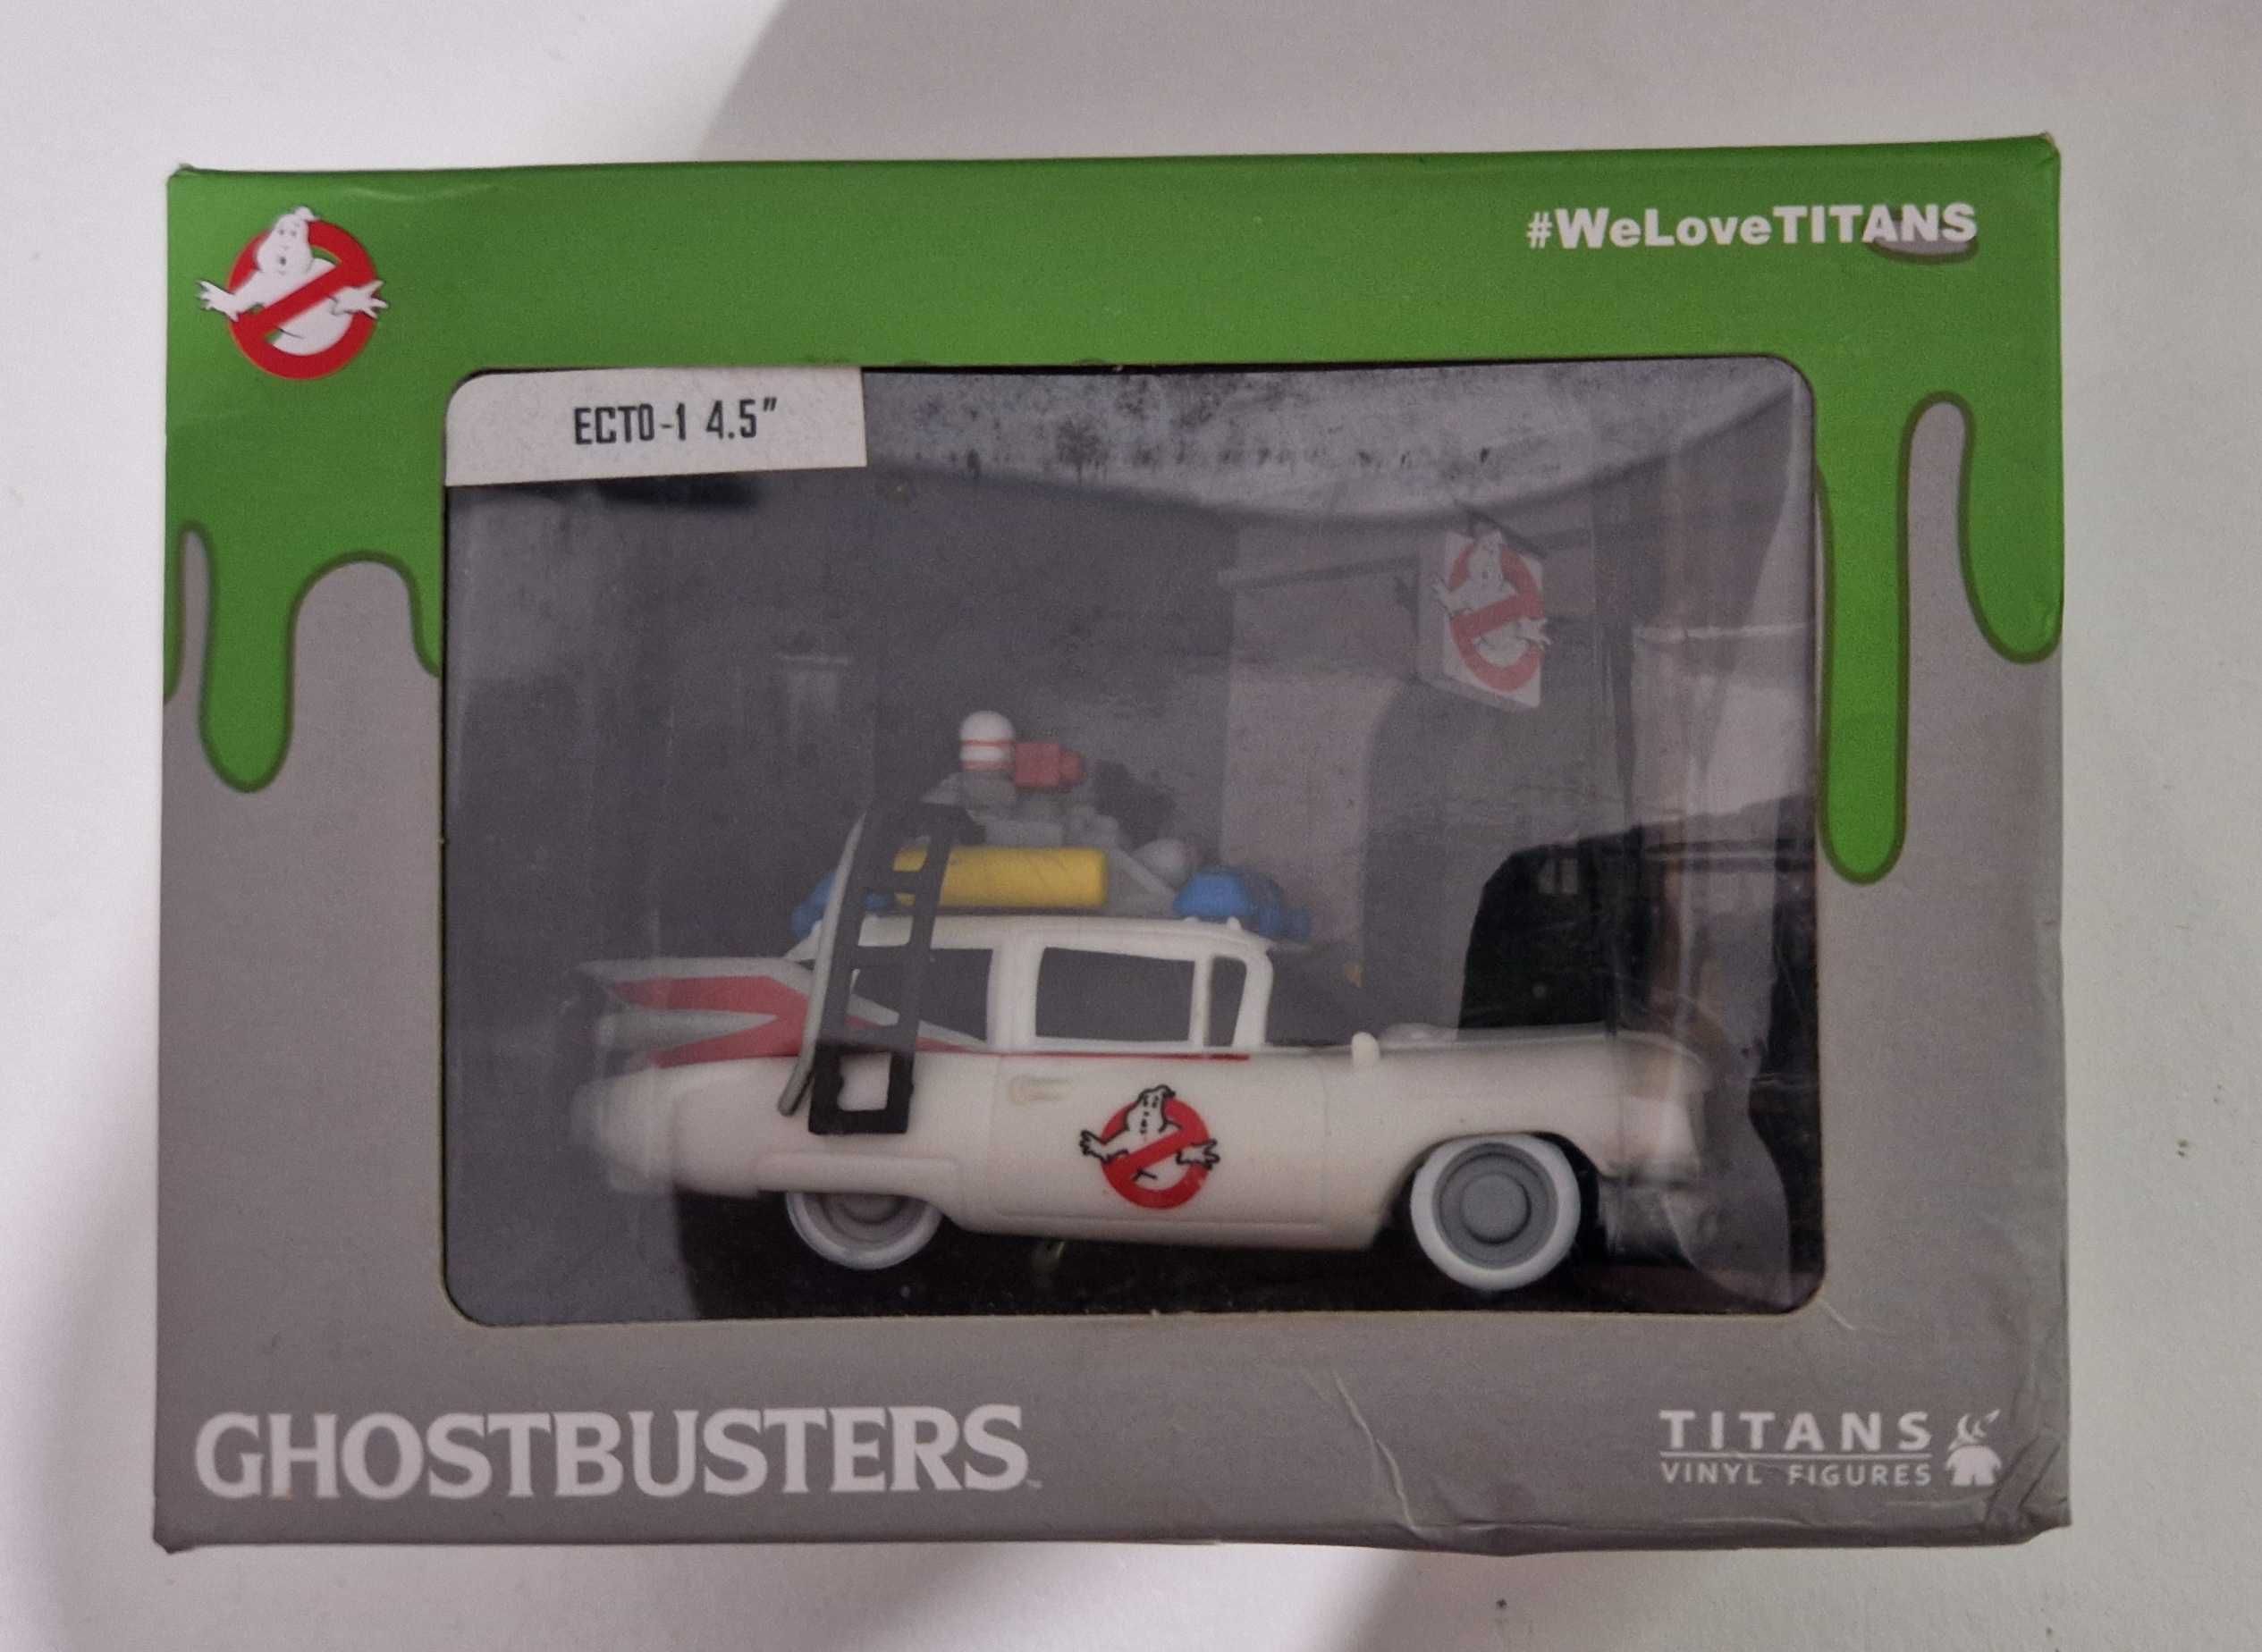 Ghostbusters vinil Figure ECTO 1